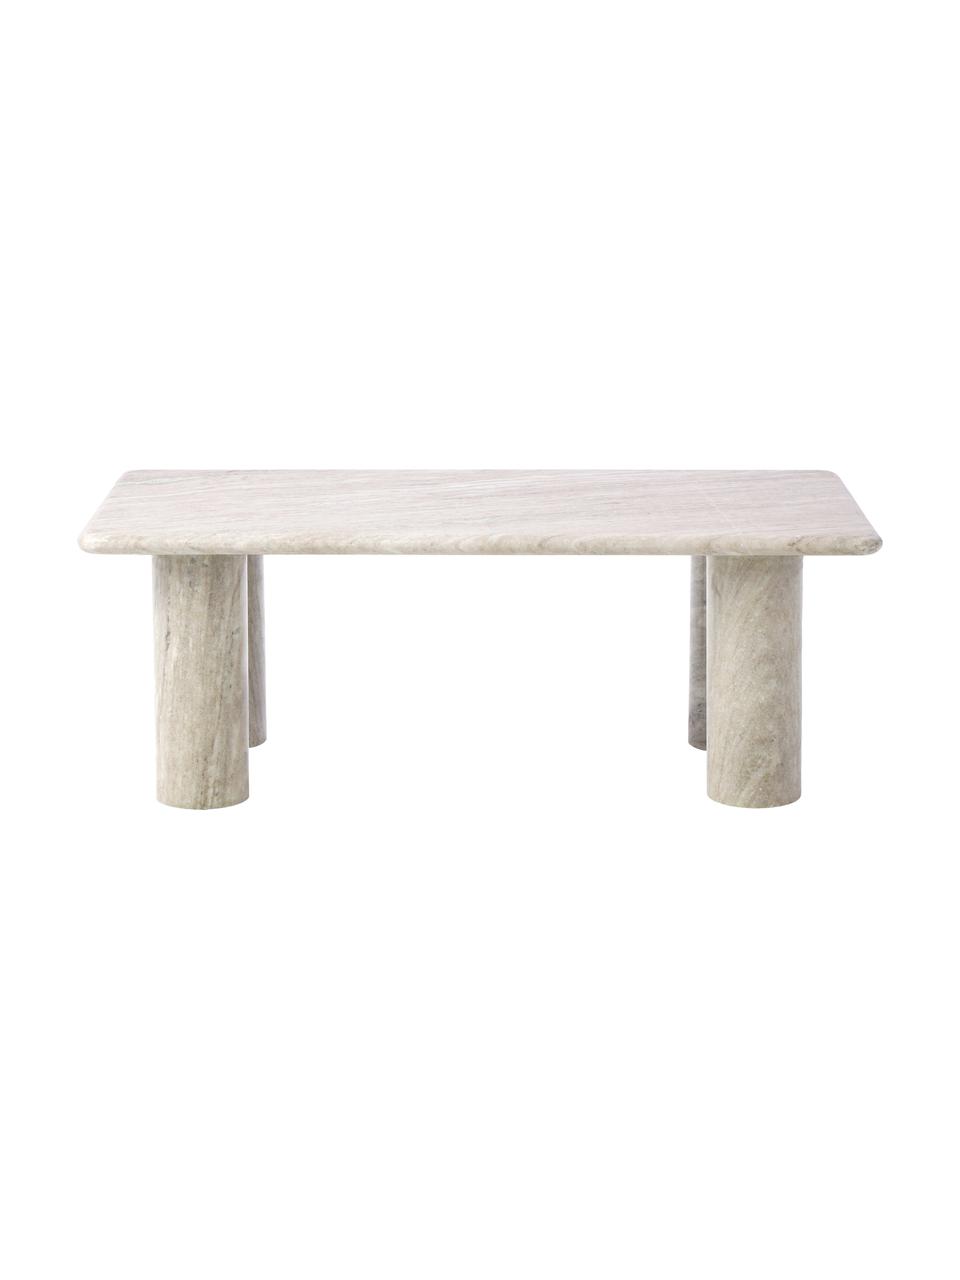 Marmeren salontafel Mabel, rechteckig, Travertijn, B 100 cm x H 35 cm